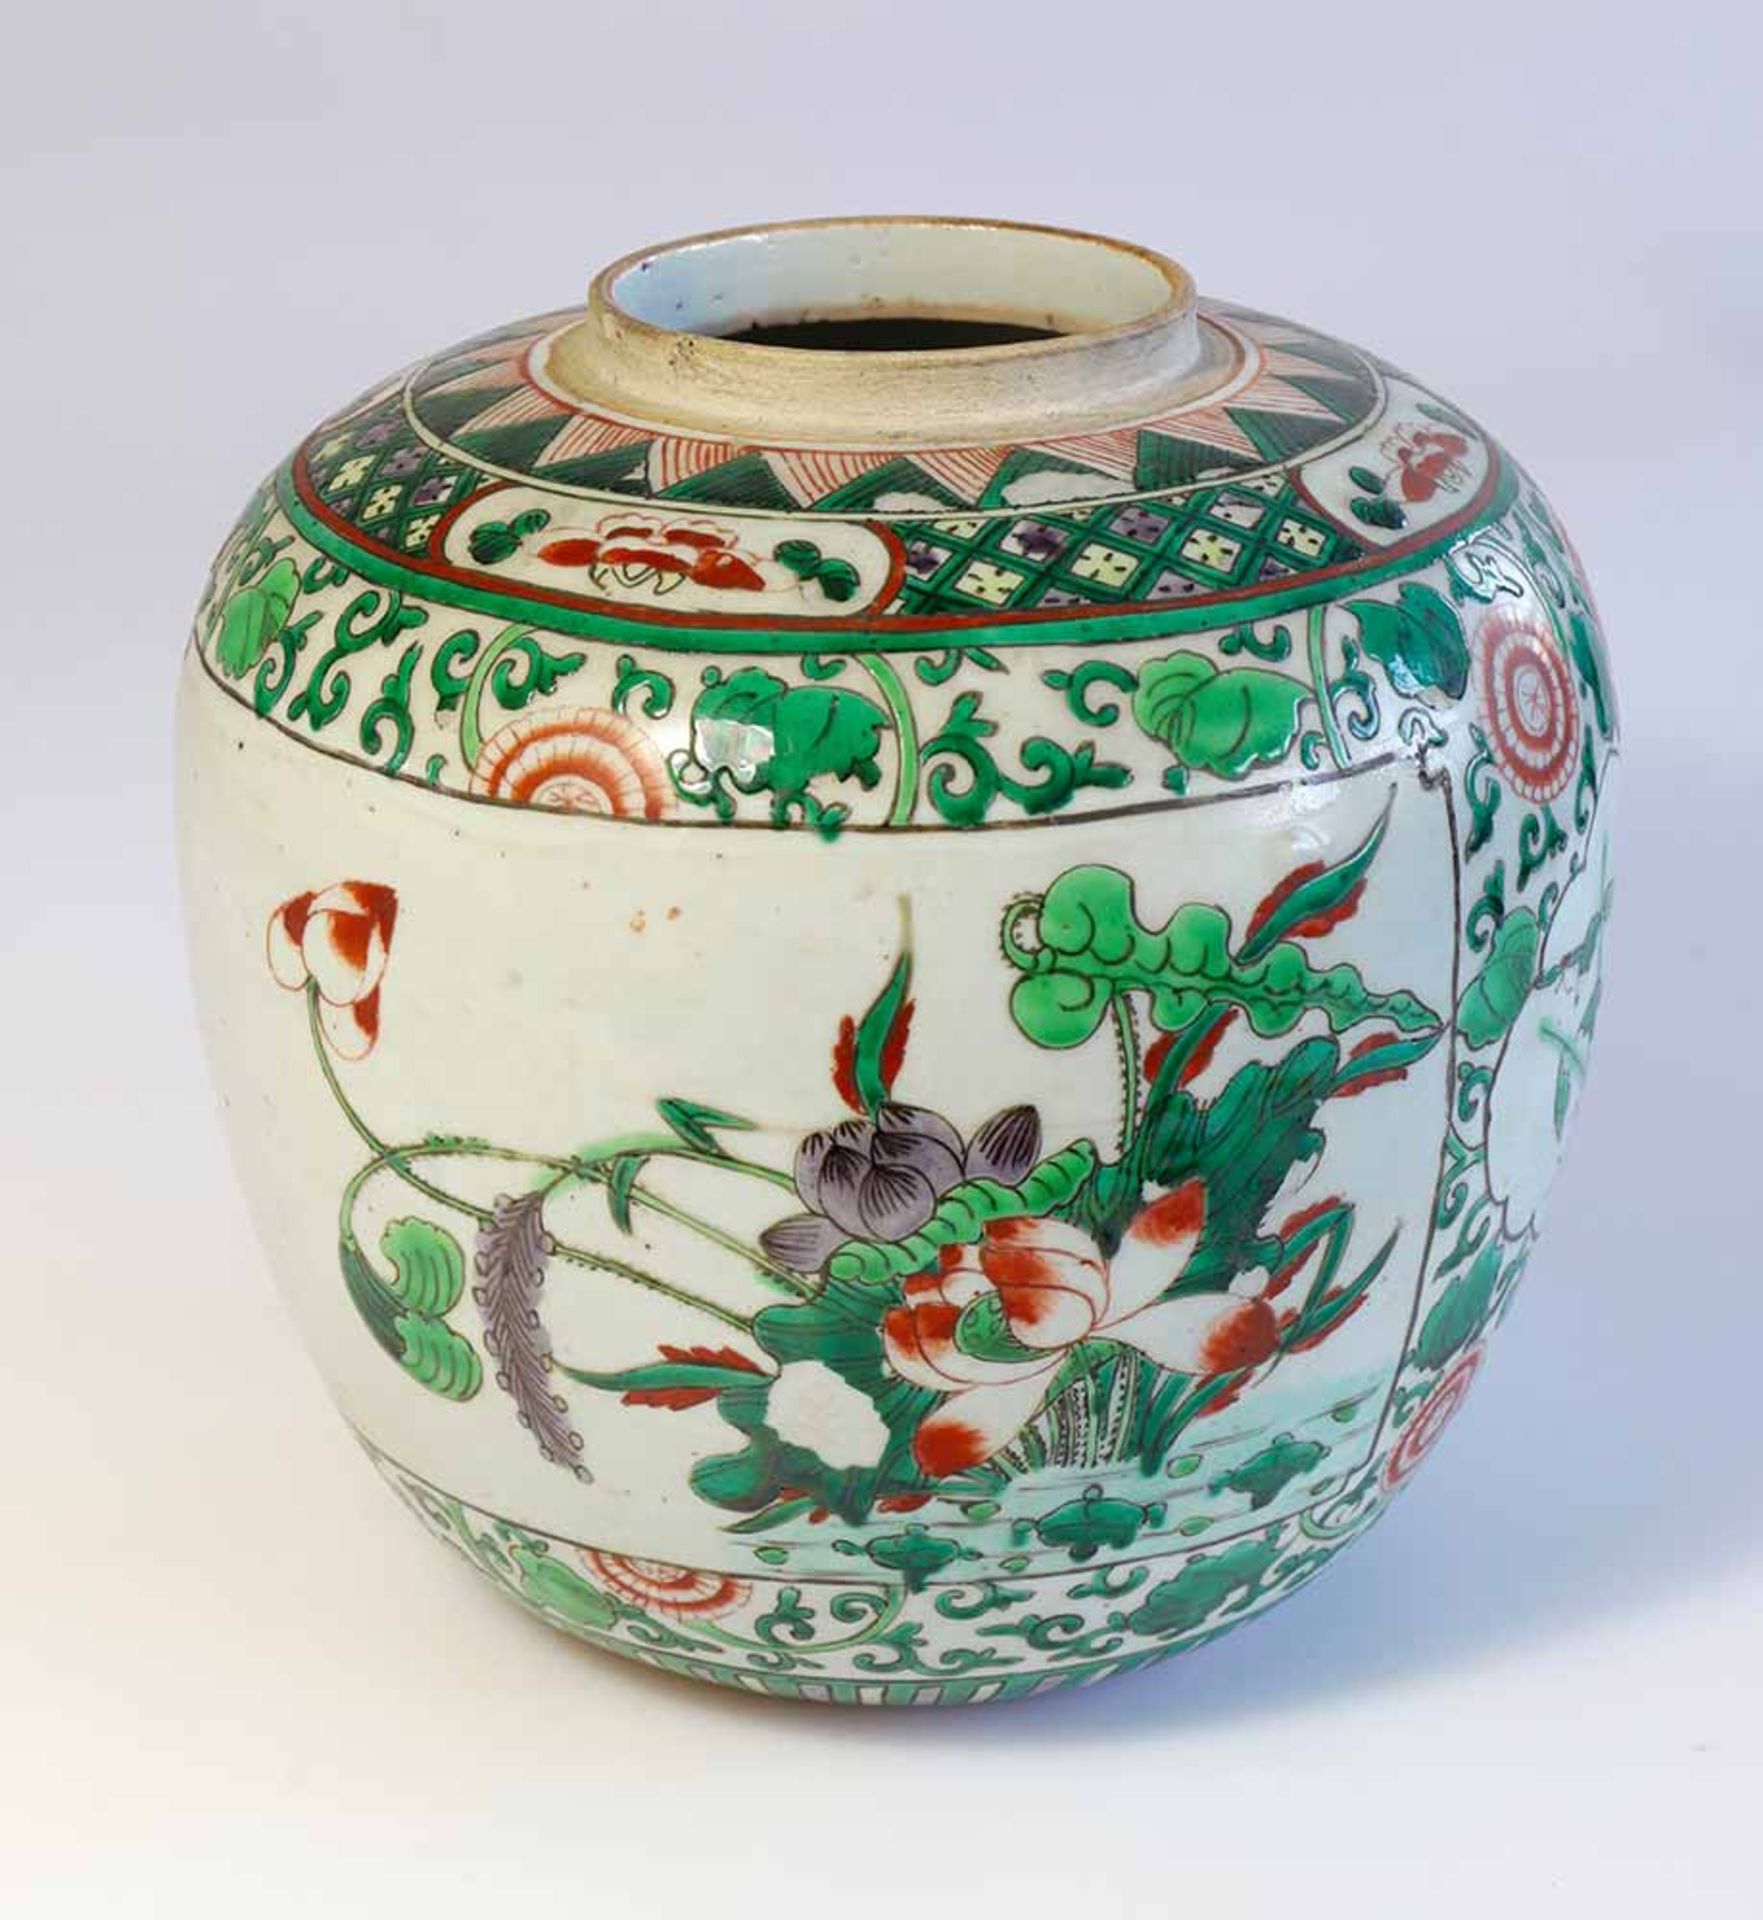 China, Qing DynastieWucai Ginger Jar, Qing Dynasty, Ingwertopf ChinaQing DynastyWucai Ingwertopf.